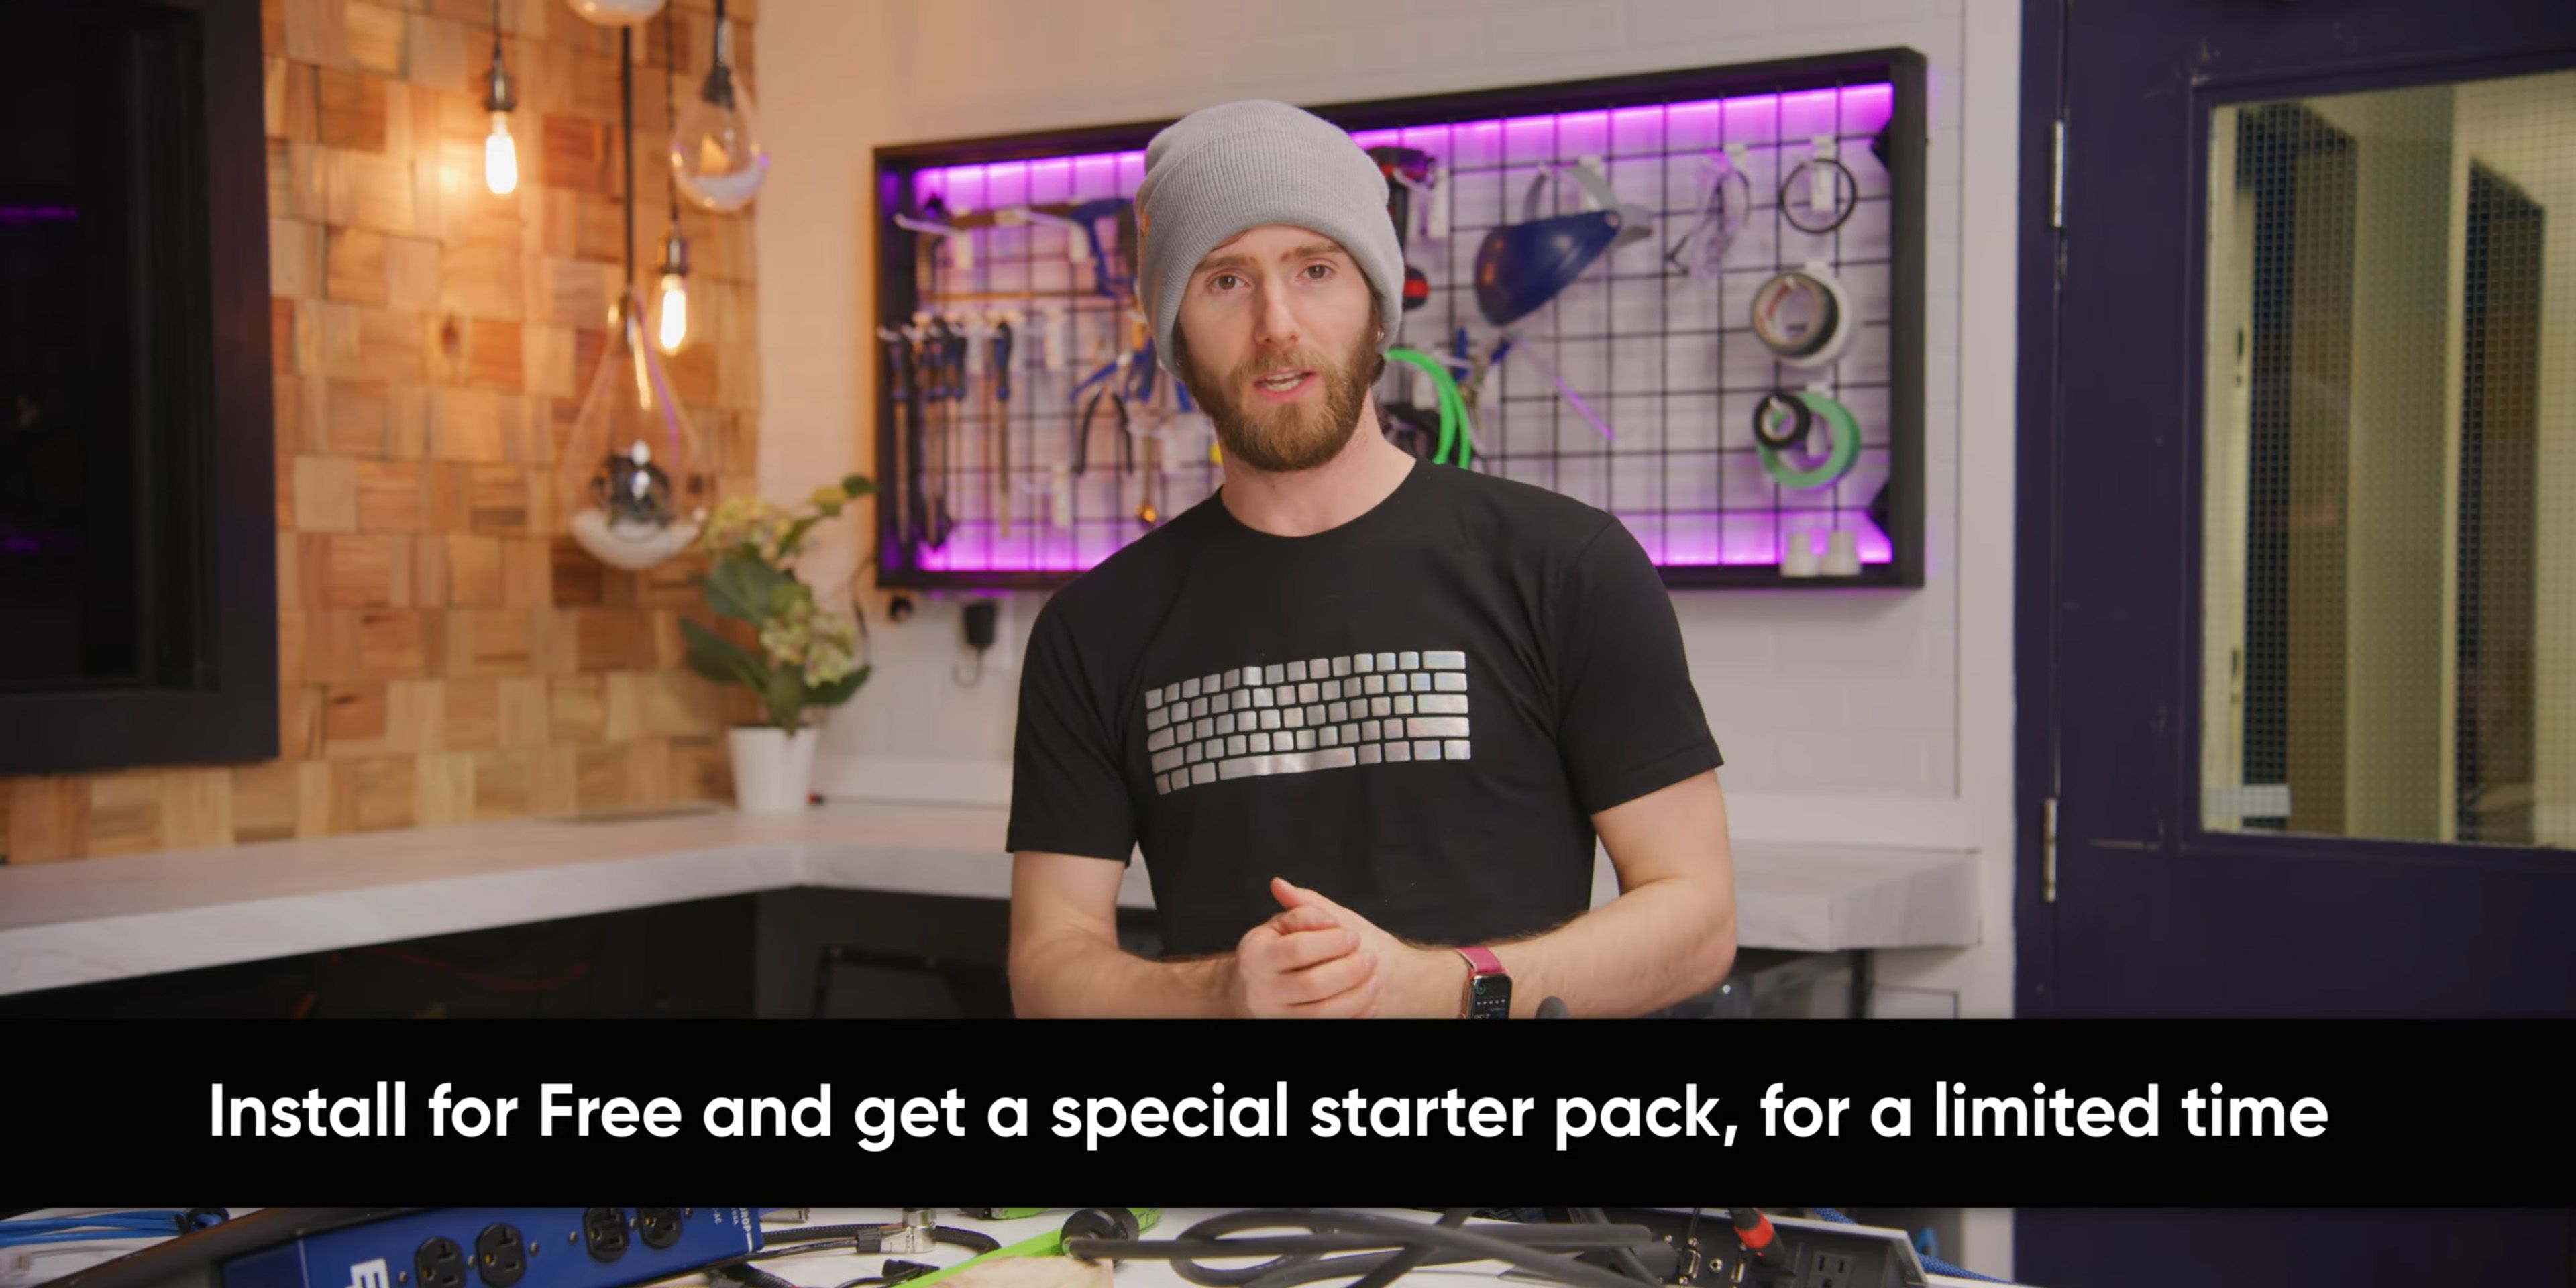 A Raid: Shadow Legends sponsor spot in a Linus Tech Tips video